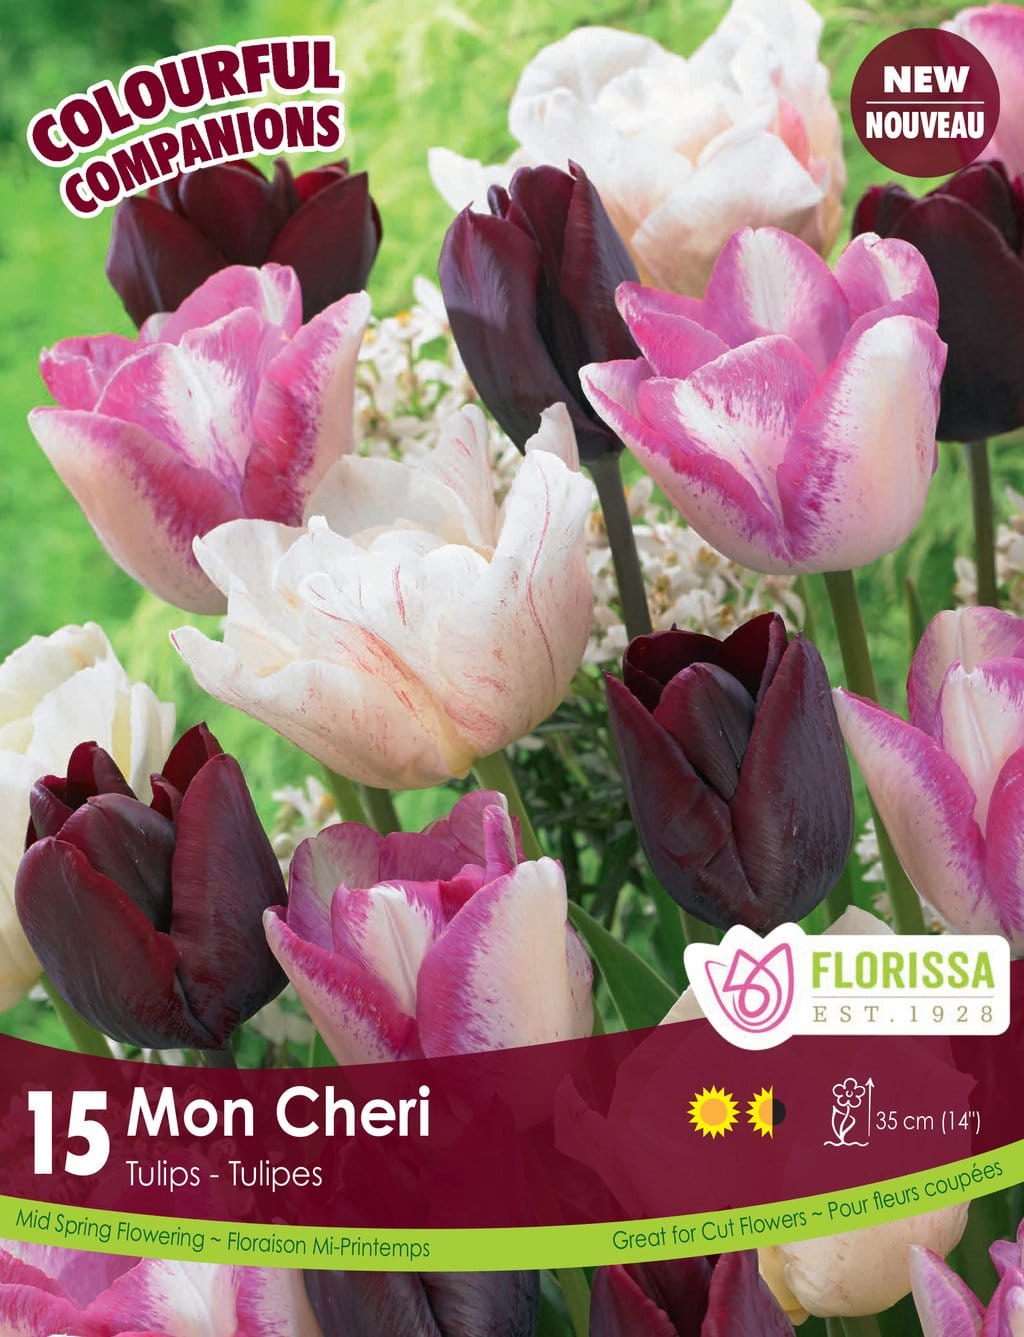 Tulips - Mon Cheri, Colorful Companions, 15 pack